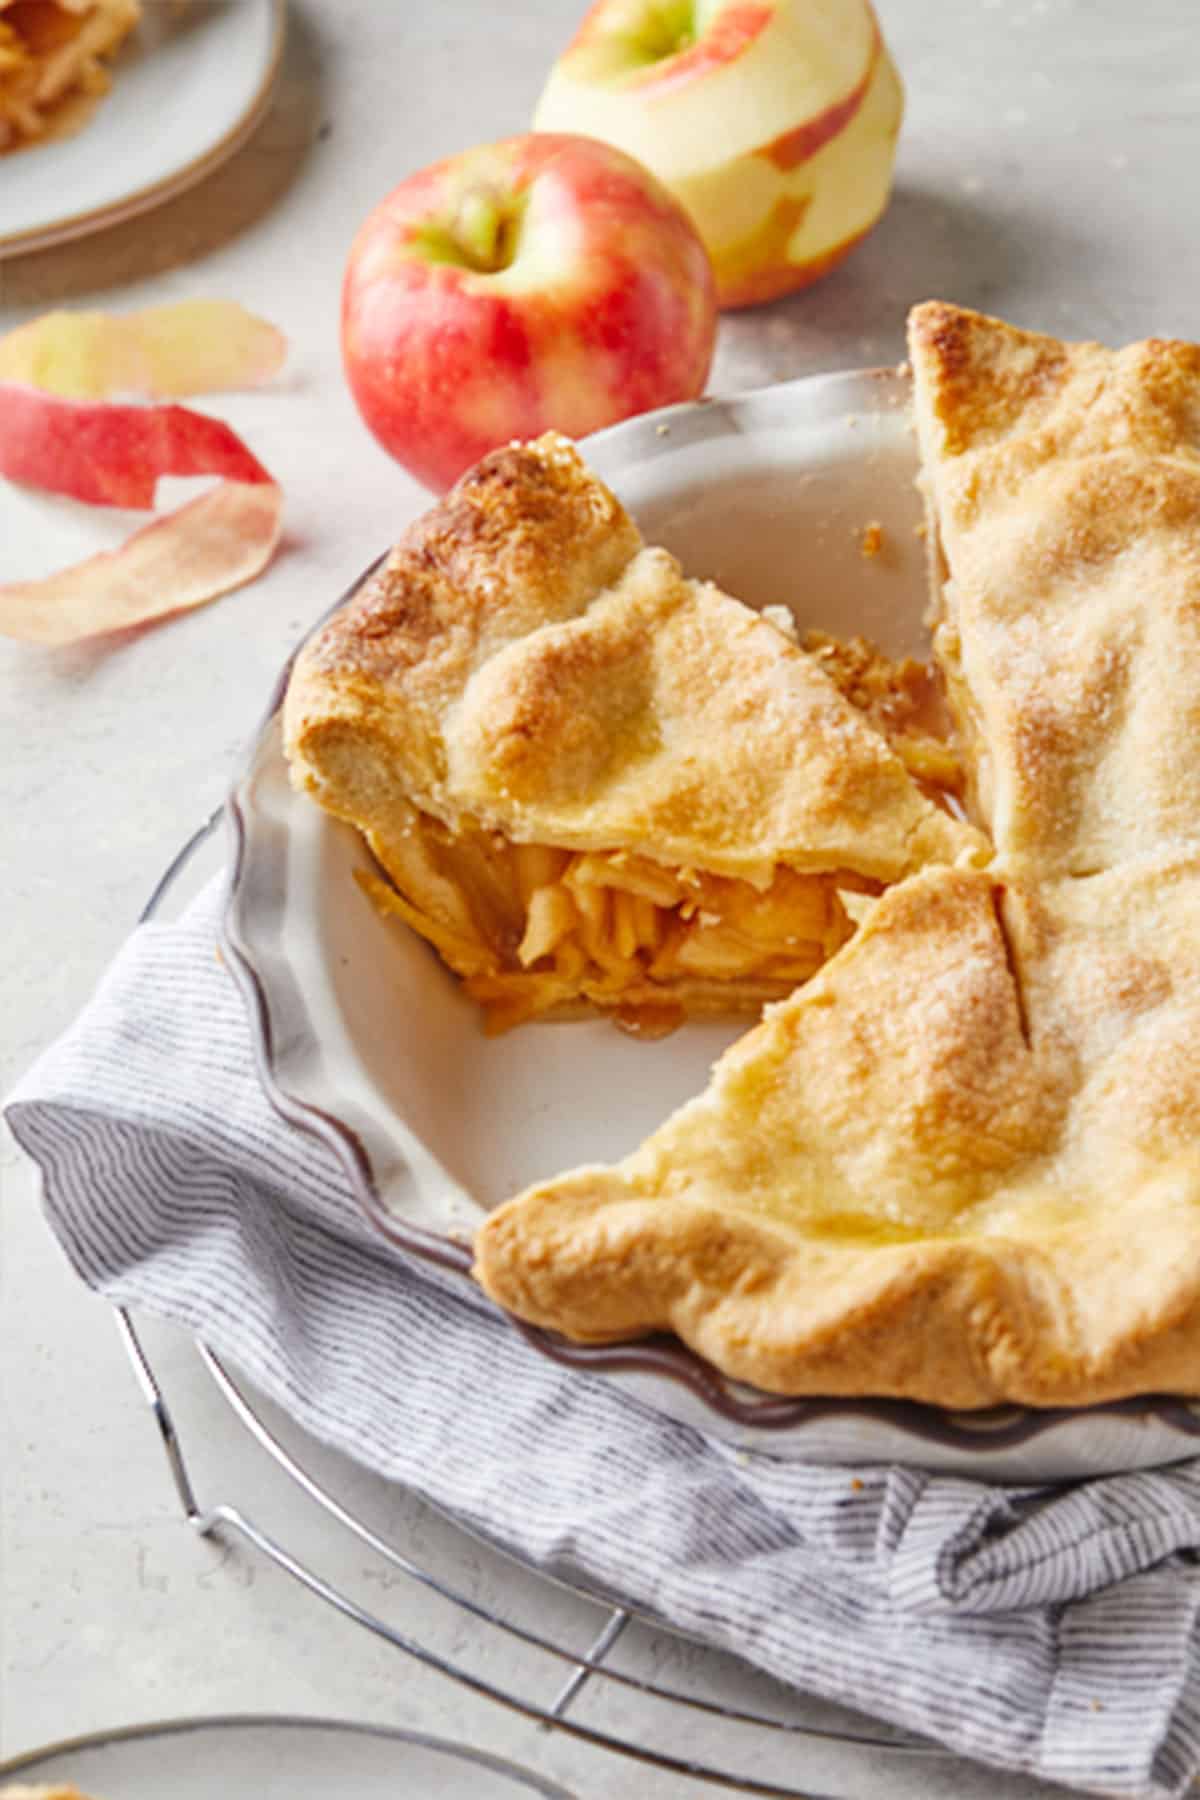 Best Apple Pie Recipe 3 - The Best Apple Pie Recipe Online (Fool-Proof!)